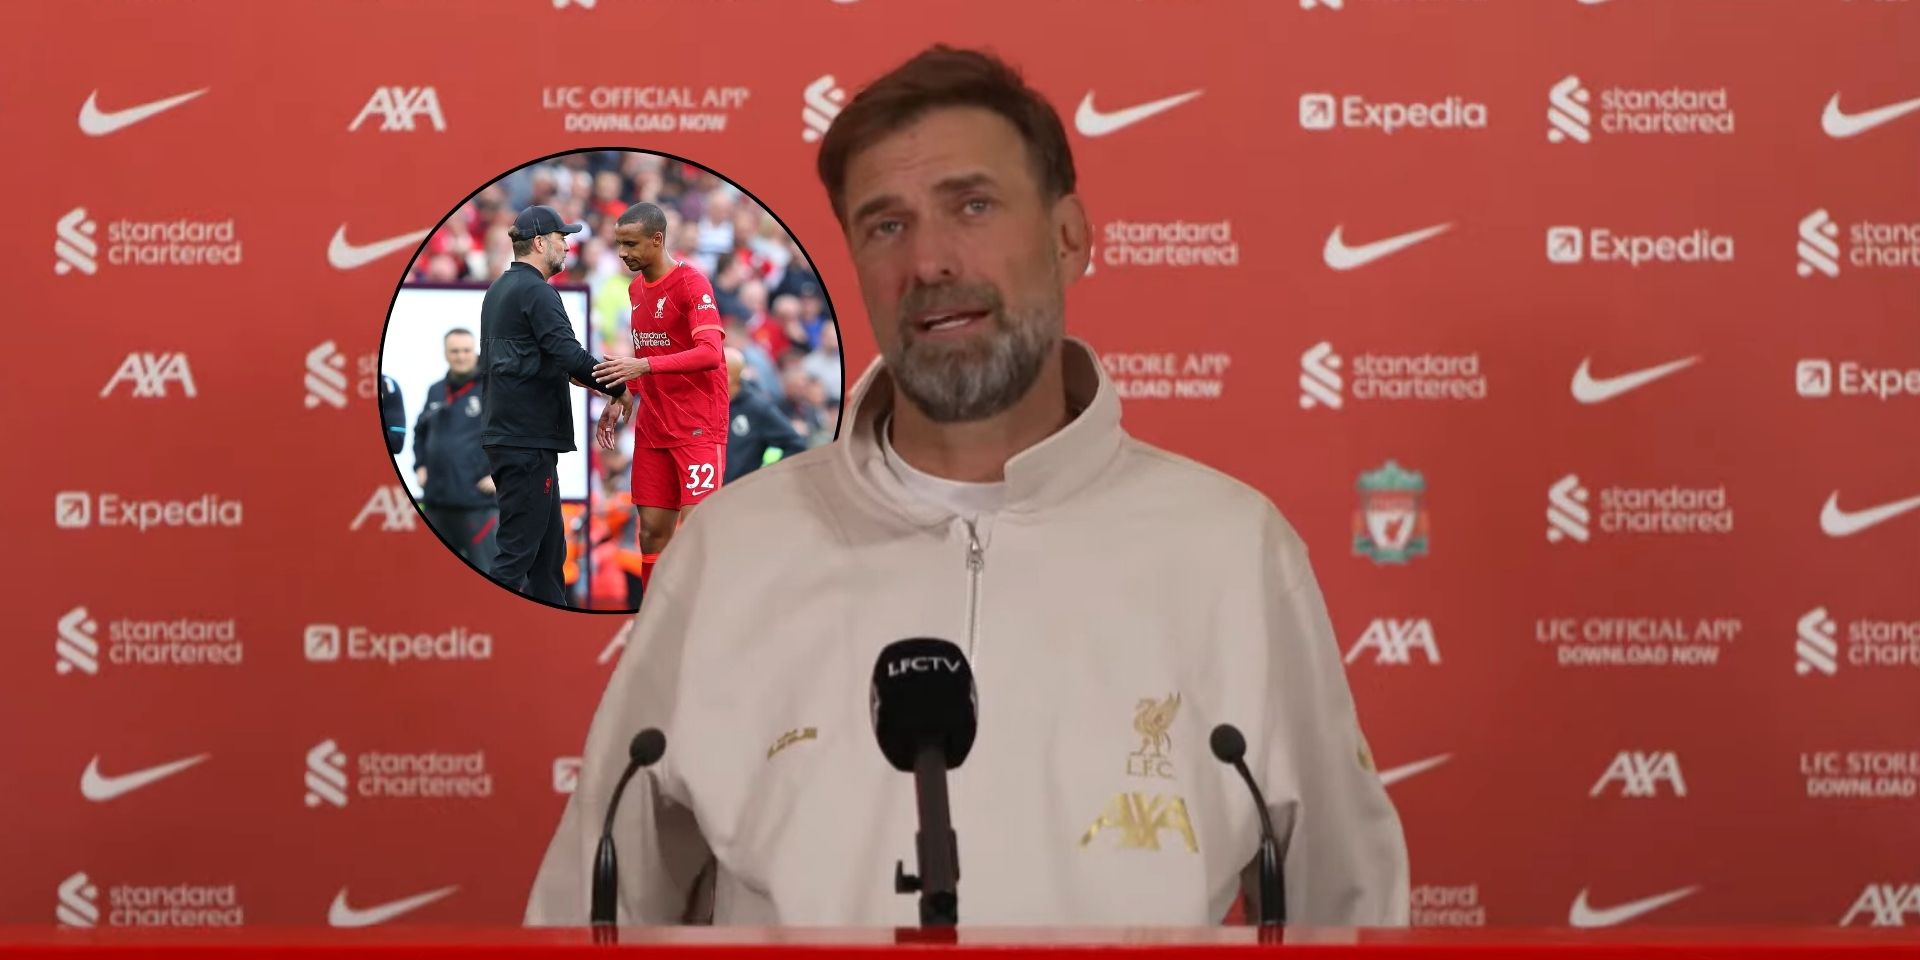 (Video) Klopp confirms Matip’s retirement plans as Liverpool departure announced